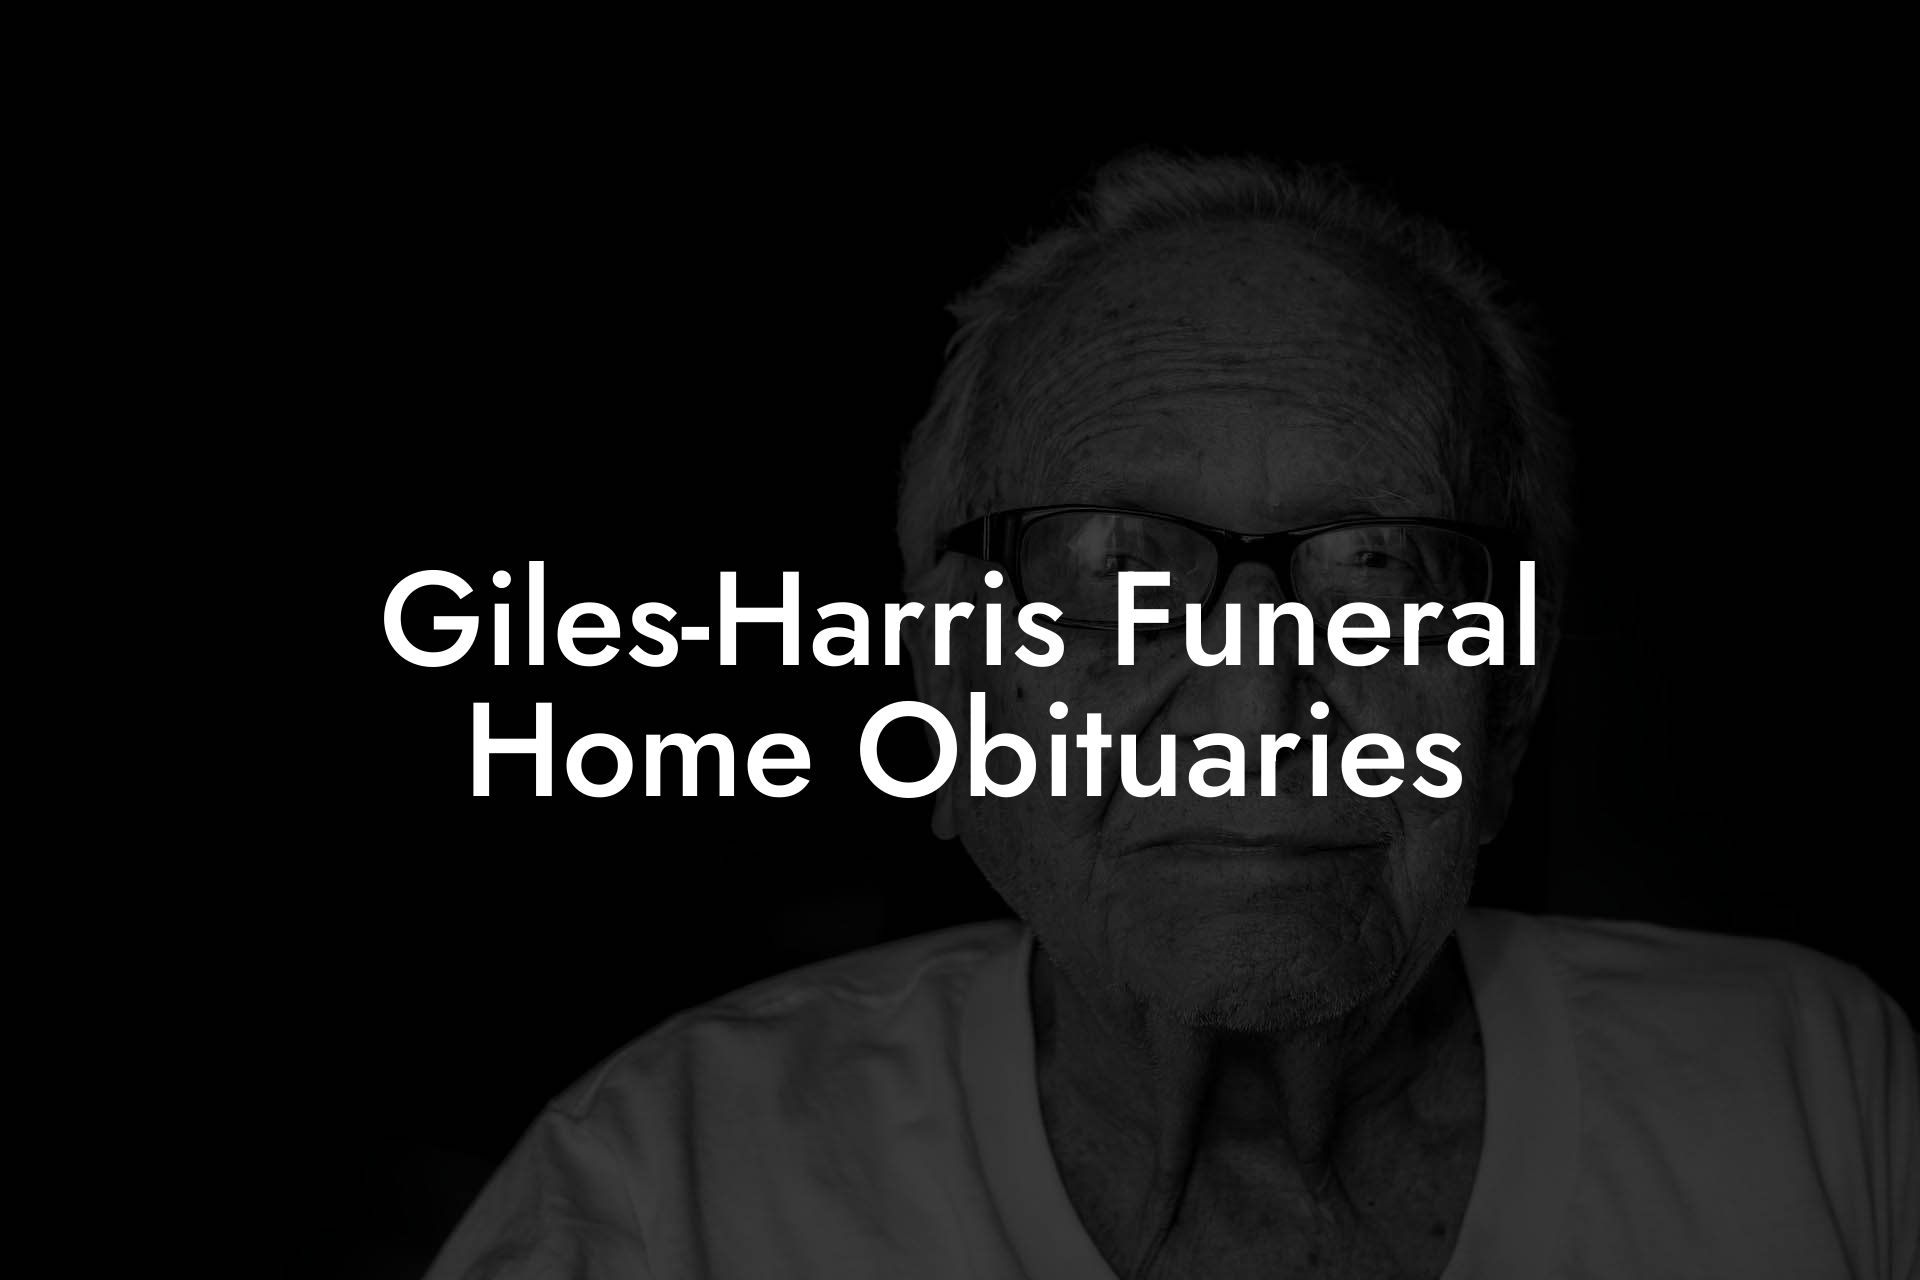 Giles-Harris Funeral Home Obituaries